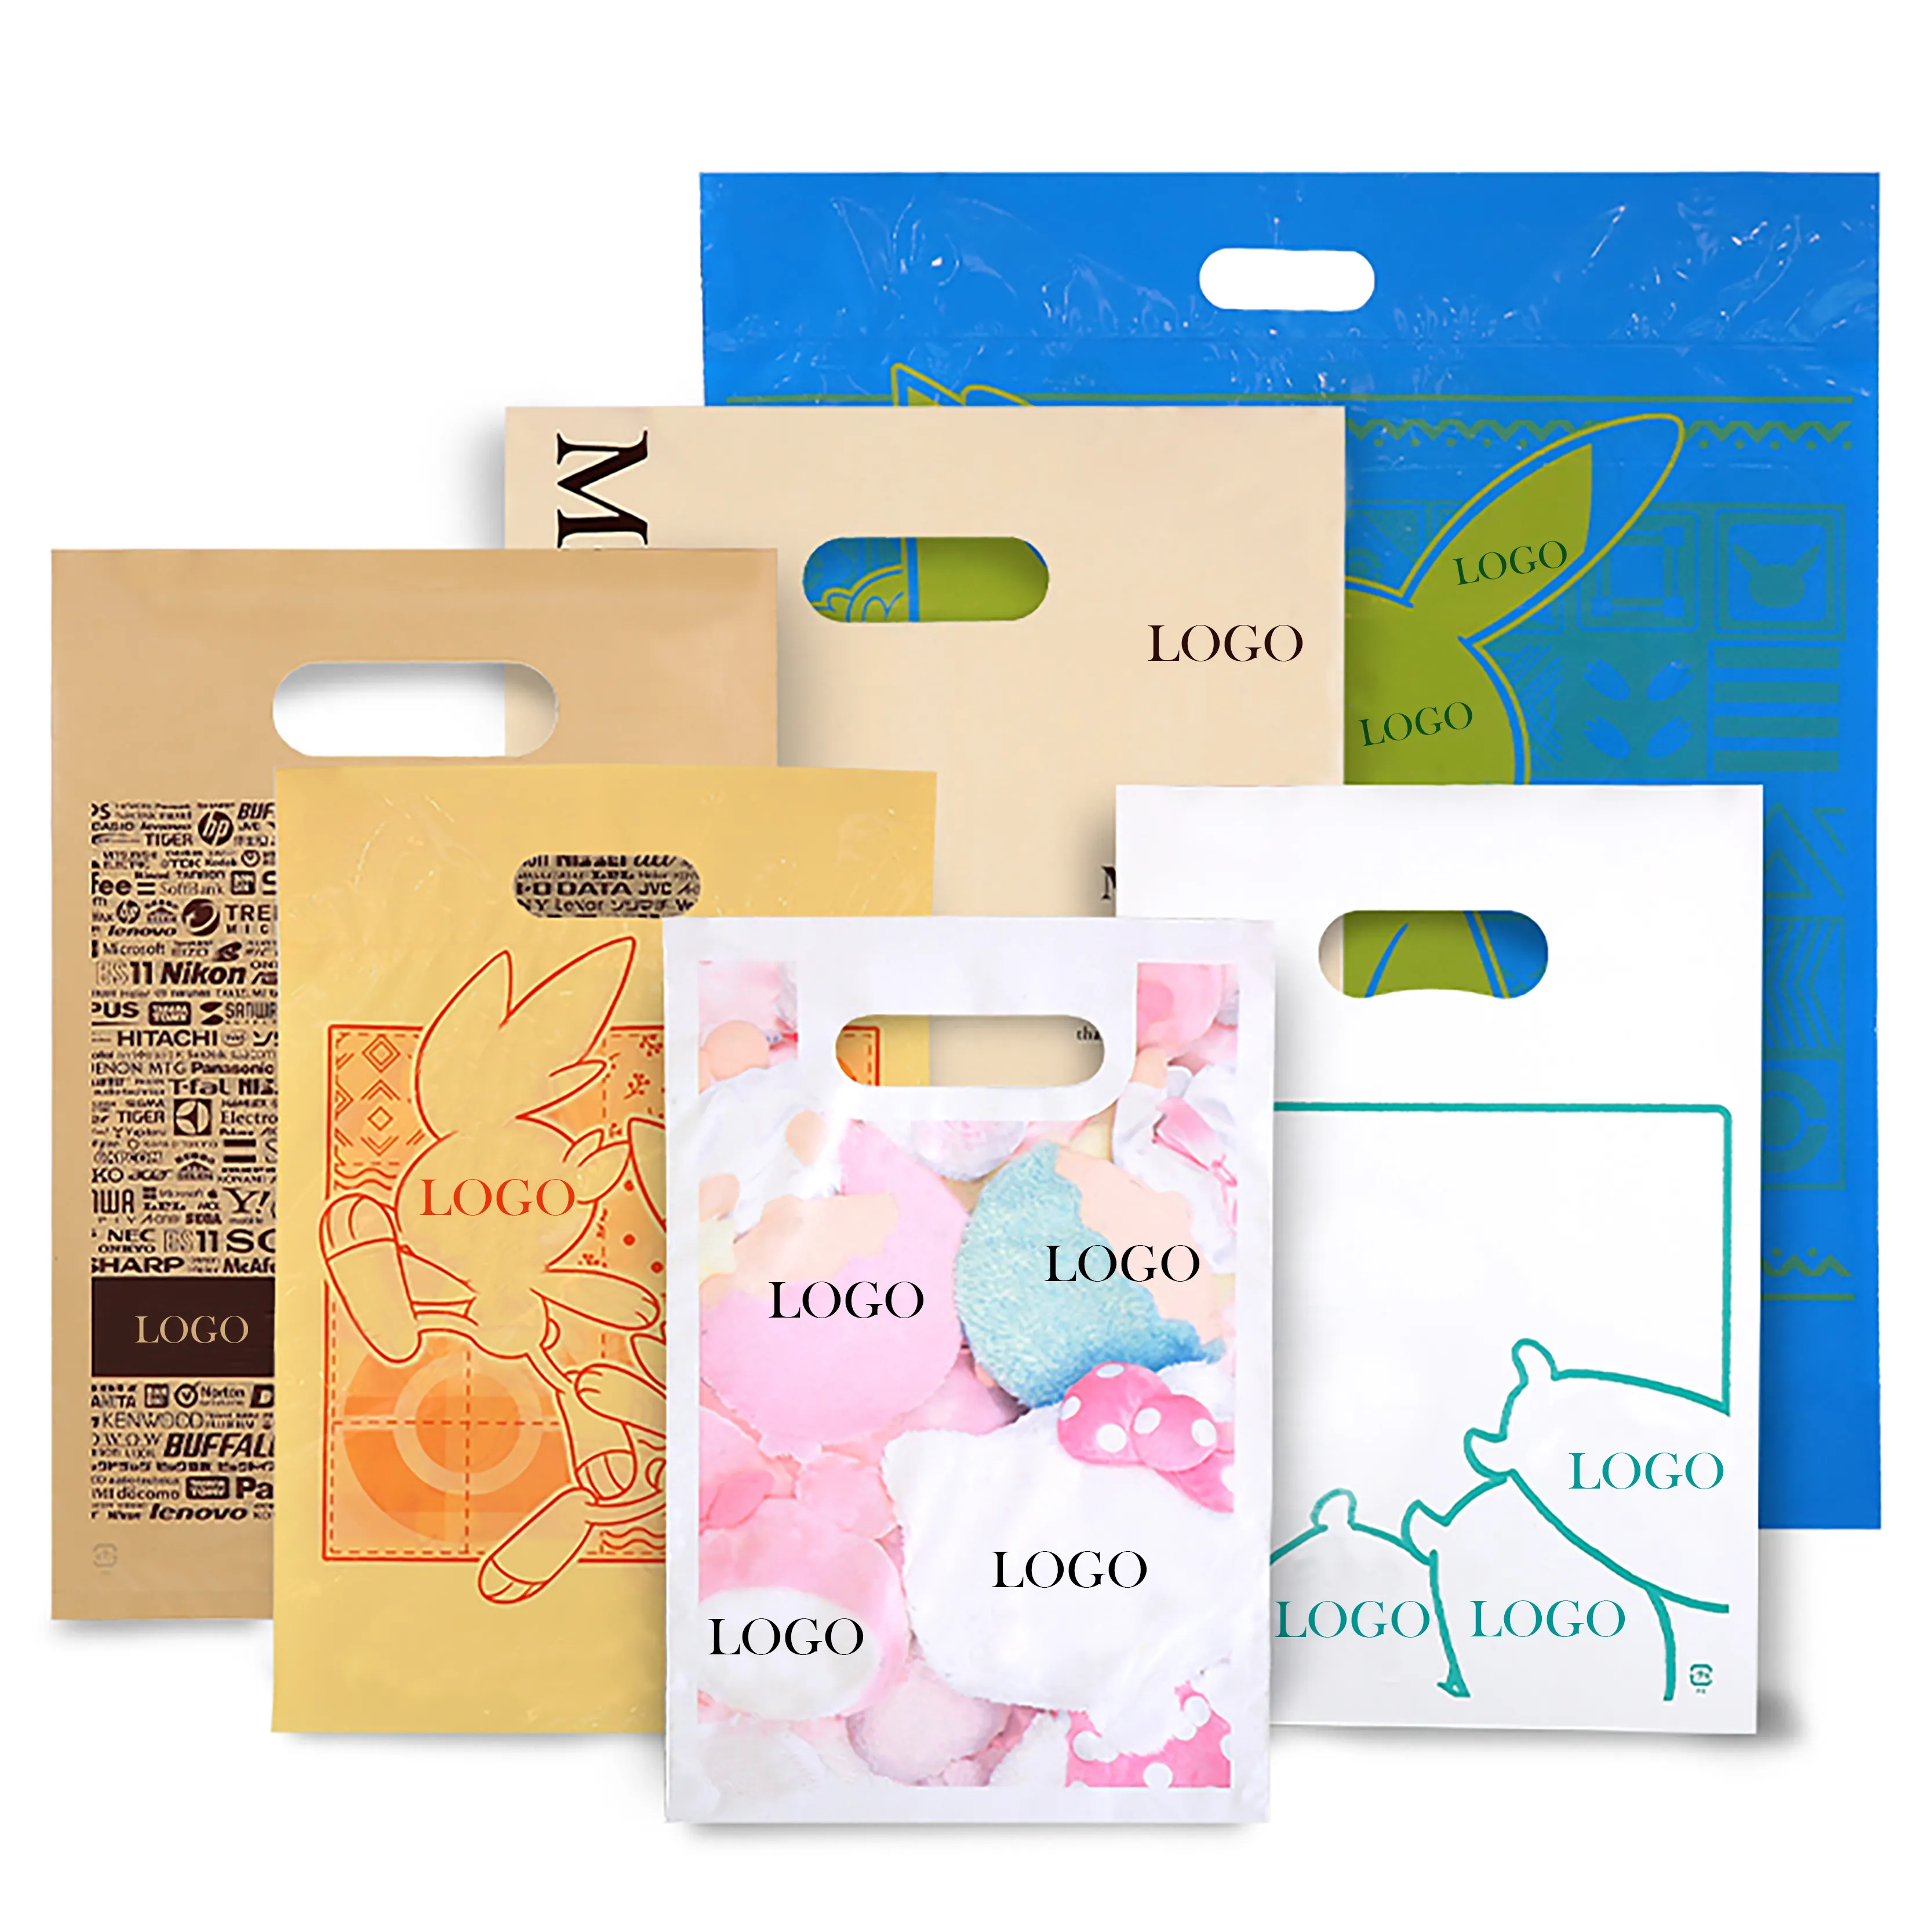 Bio degradable handbag die cut packing plastic carrier retail shopping bags with logos custom printed